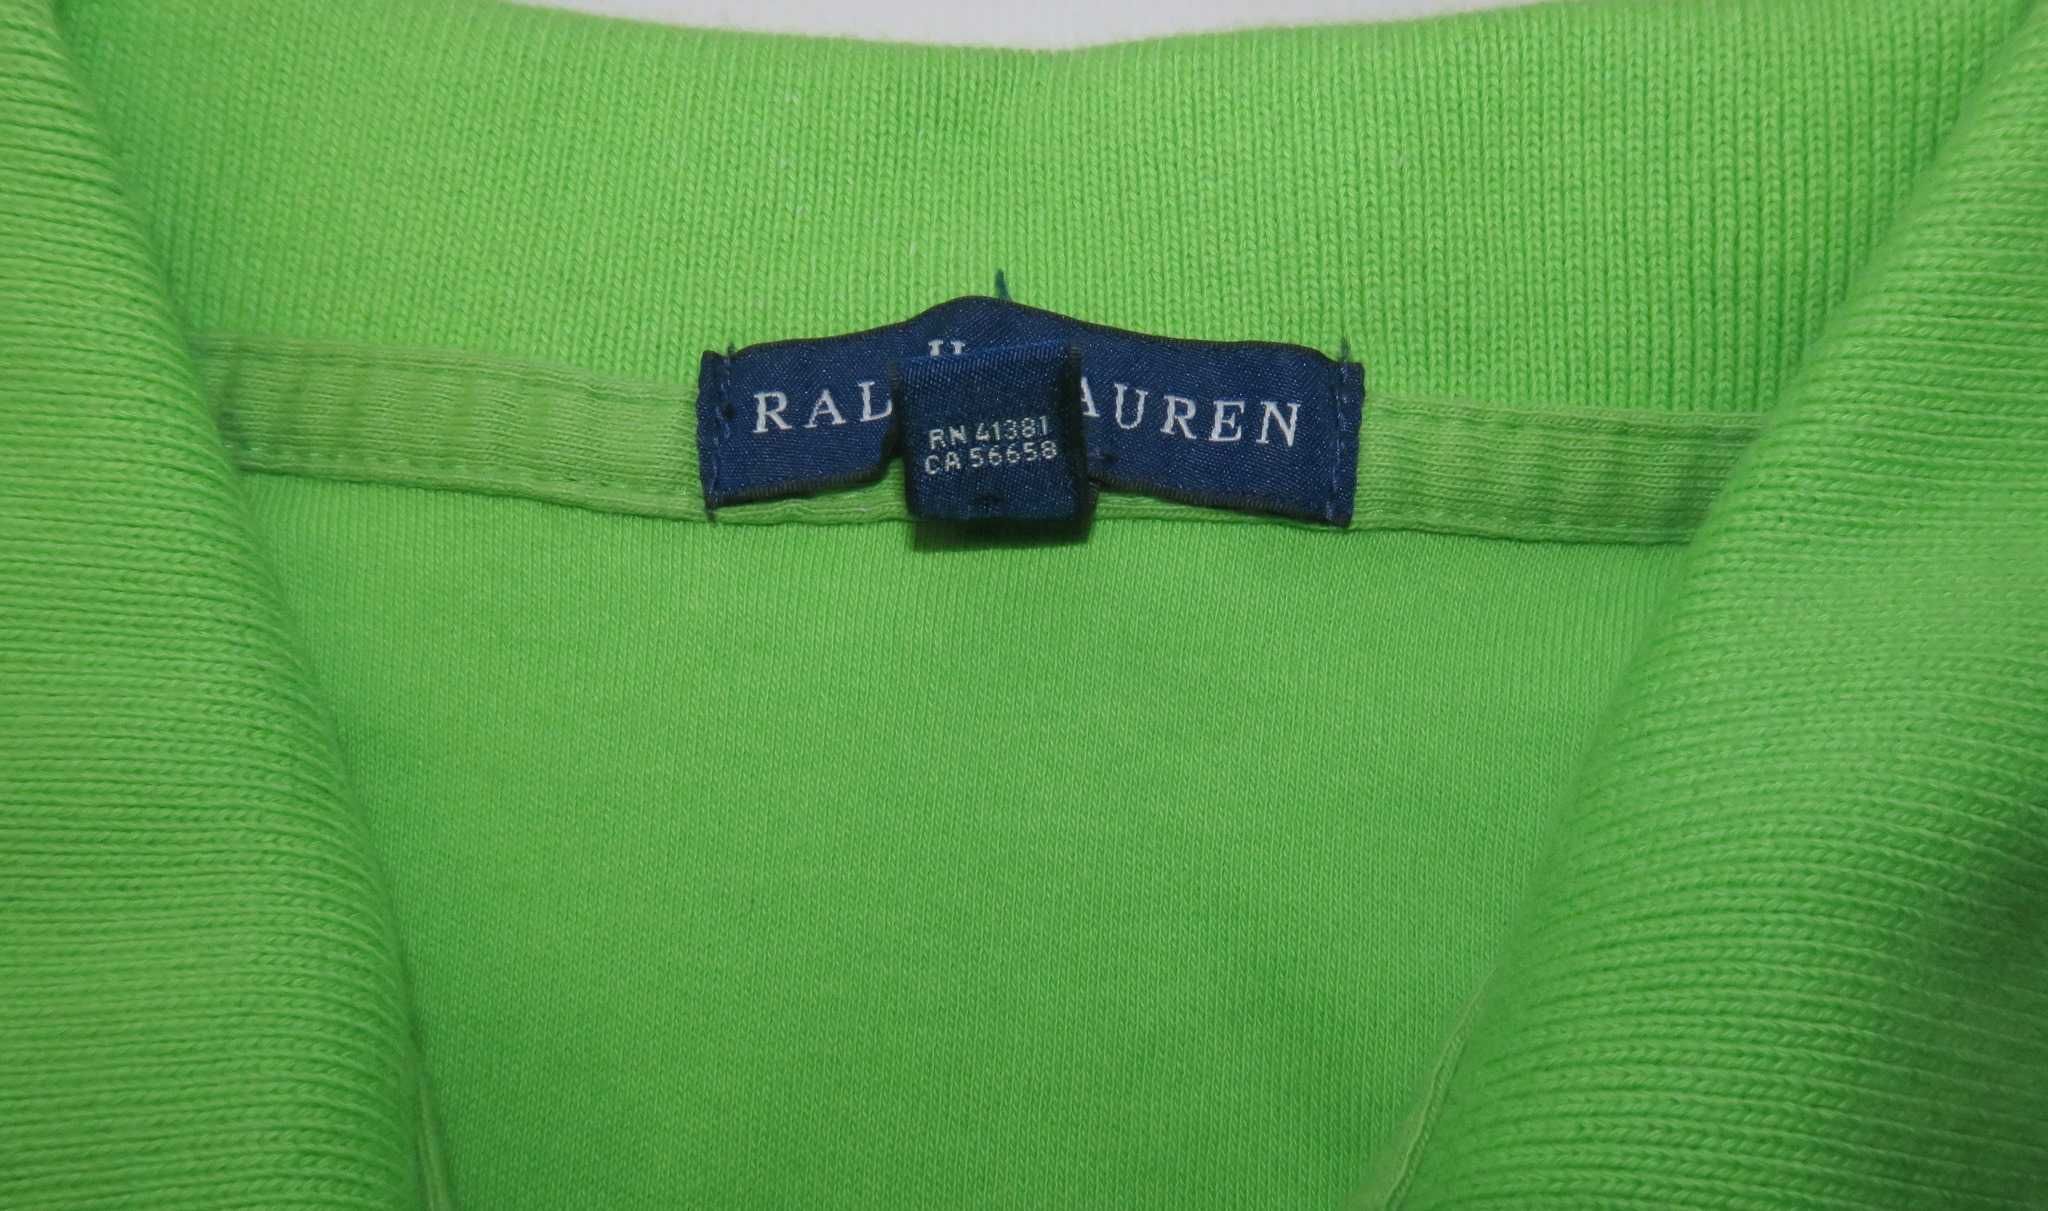 Polo Ralph Lauren koszulka polo bawełna S